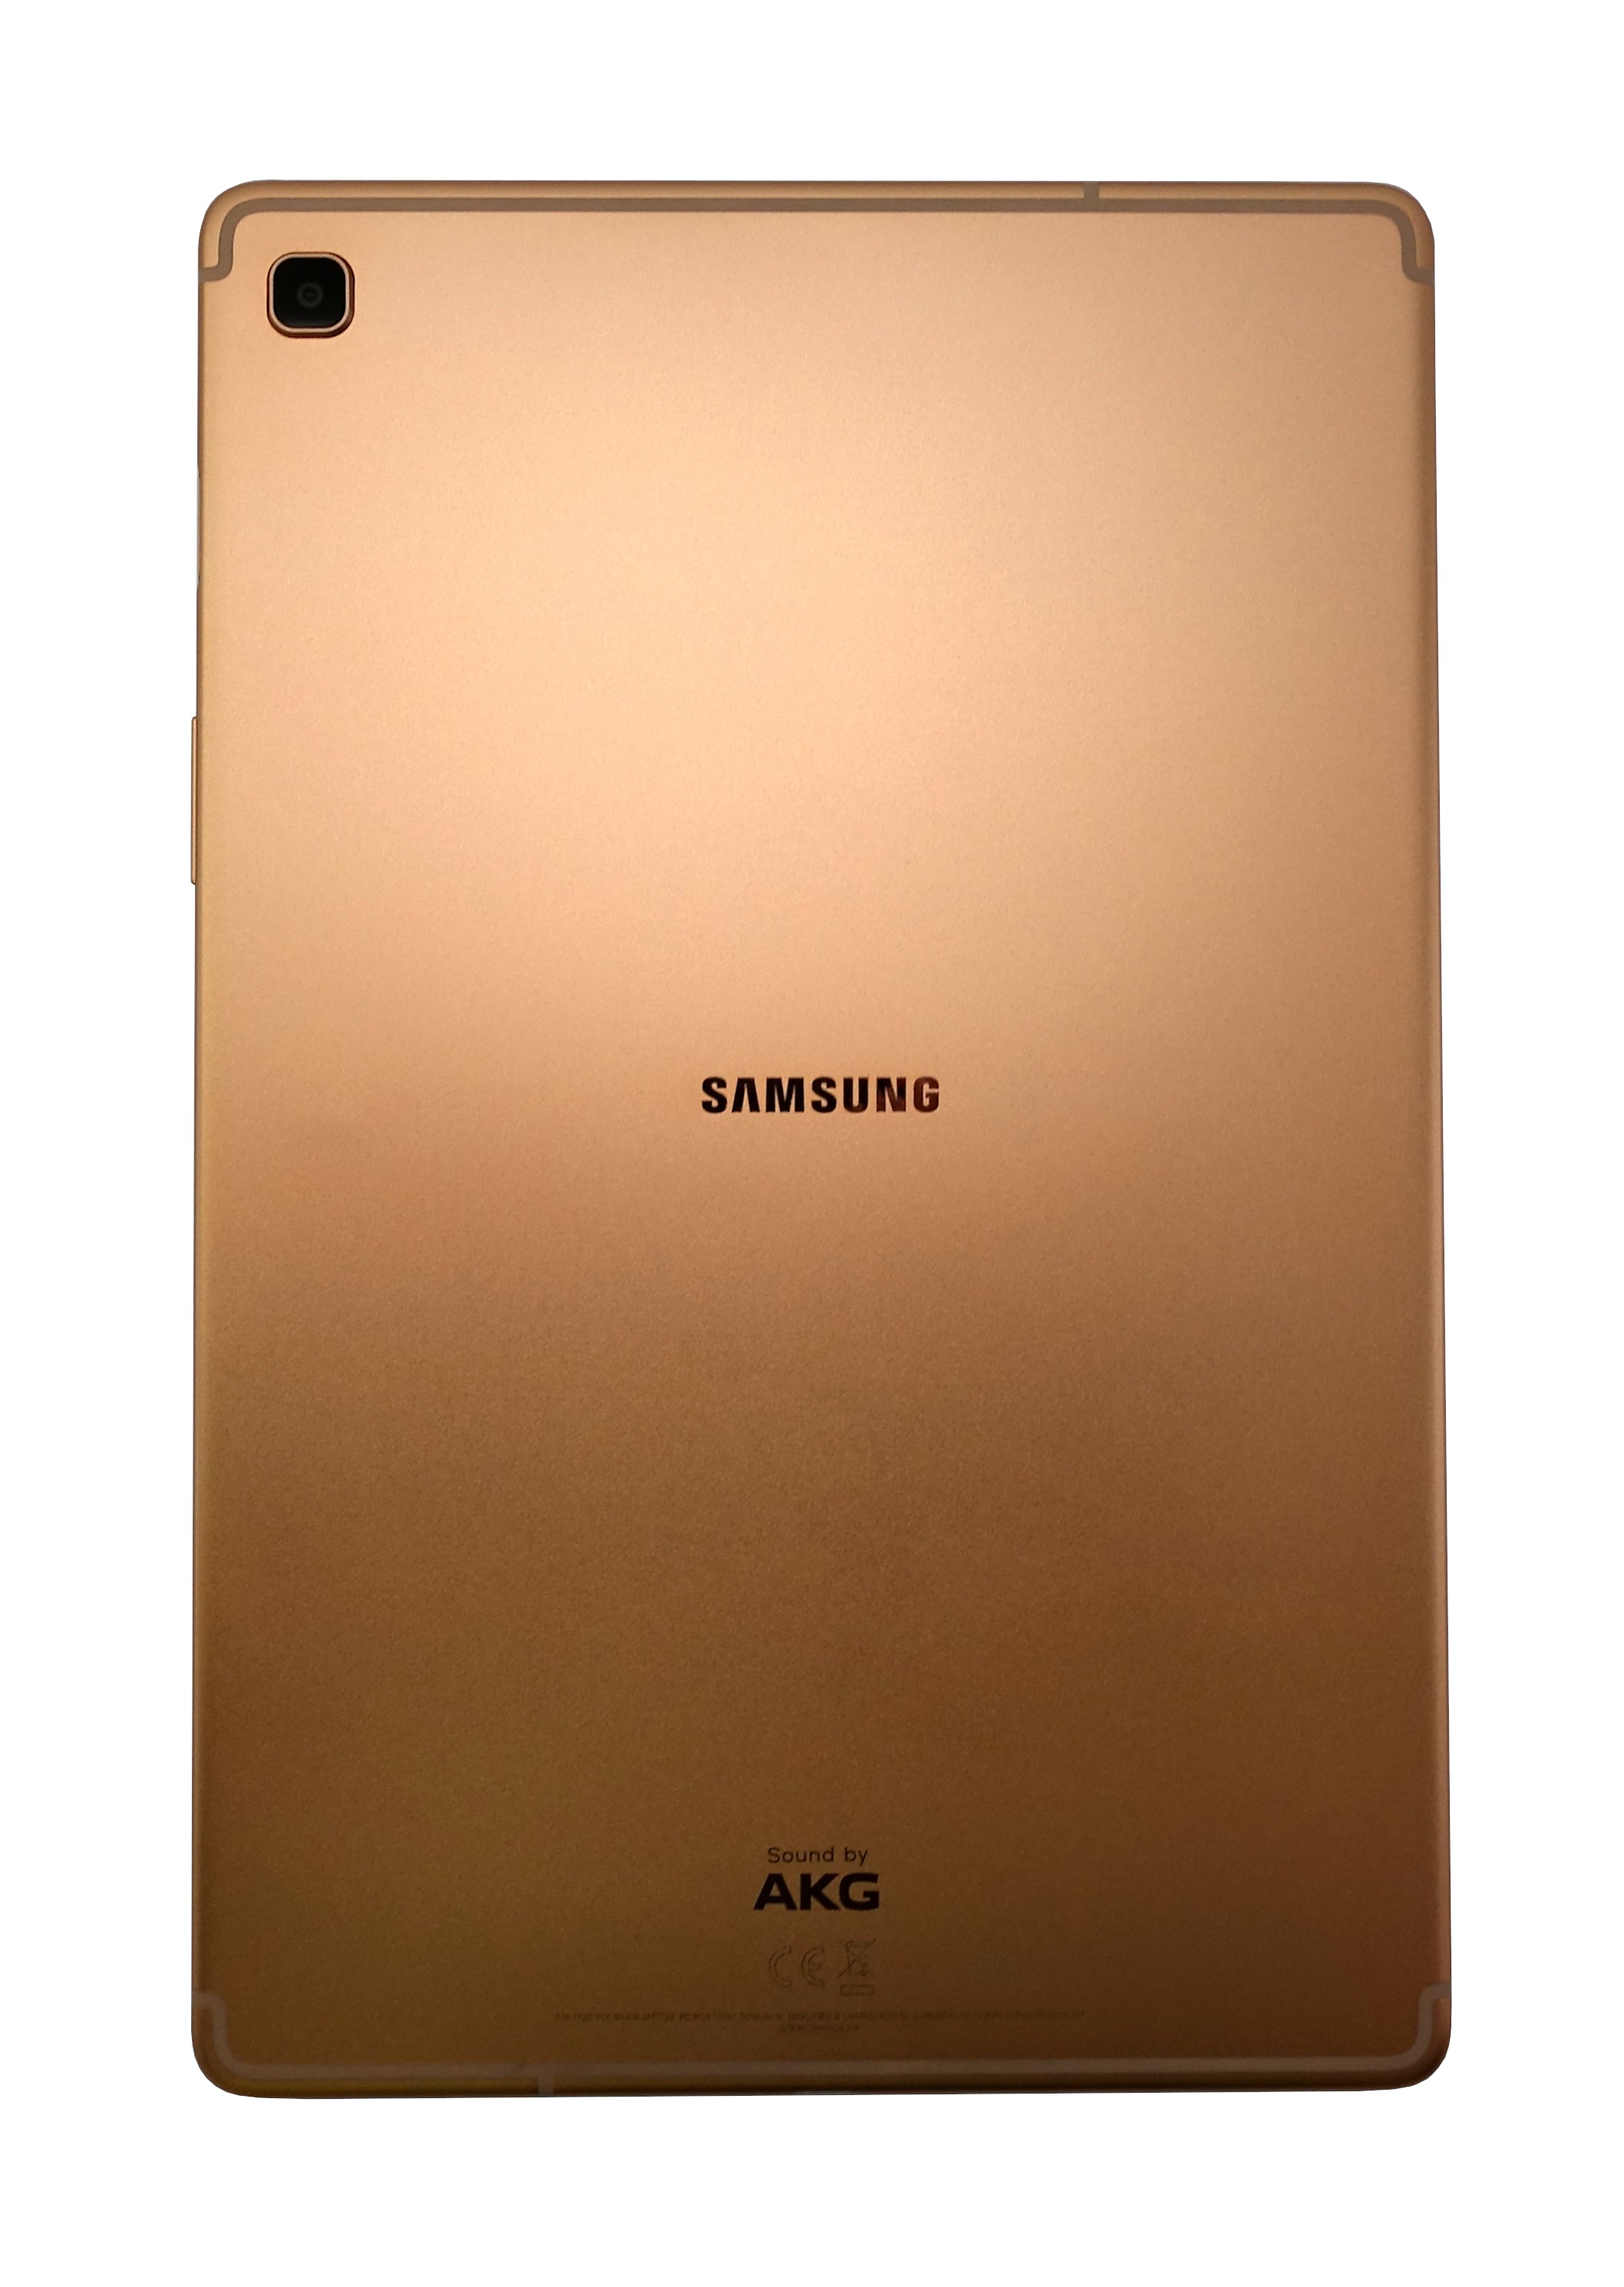 Samsung Galaxy Tab S5e Tablet, 10.5", 64GB, WiFi, Gold, SM-T720